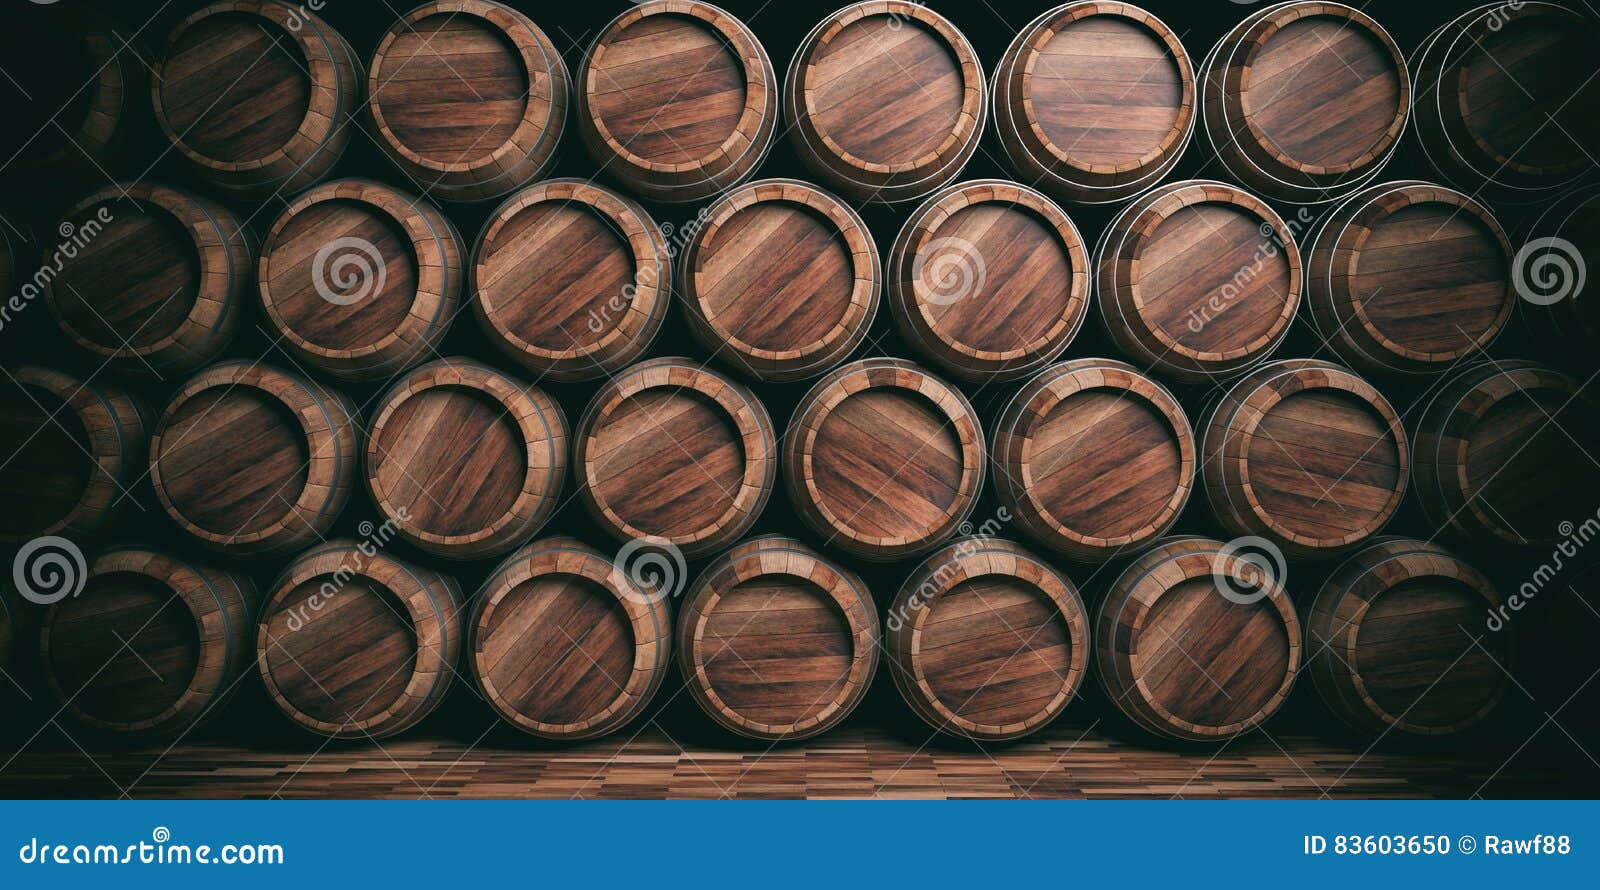 3d rendering wooden barrels background